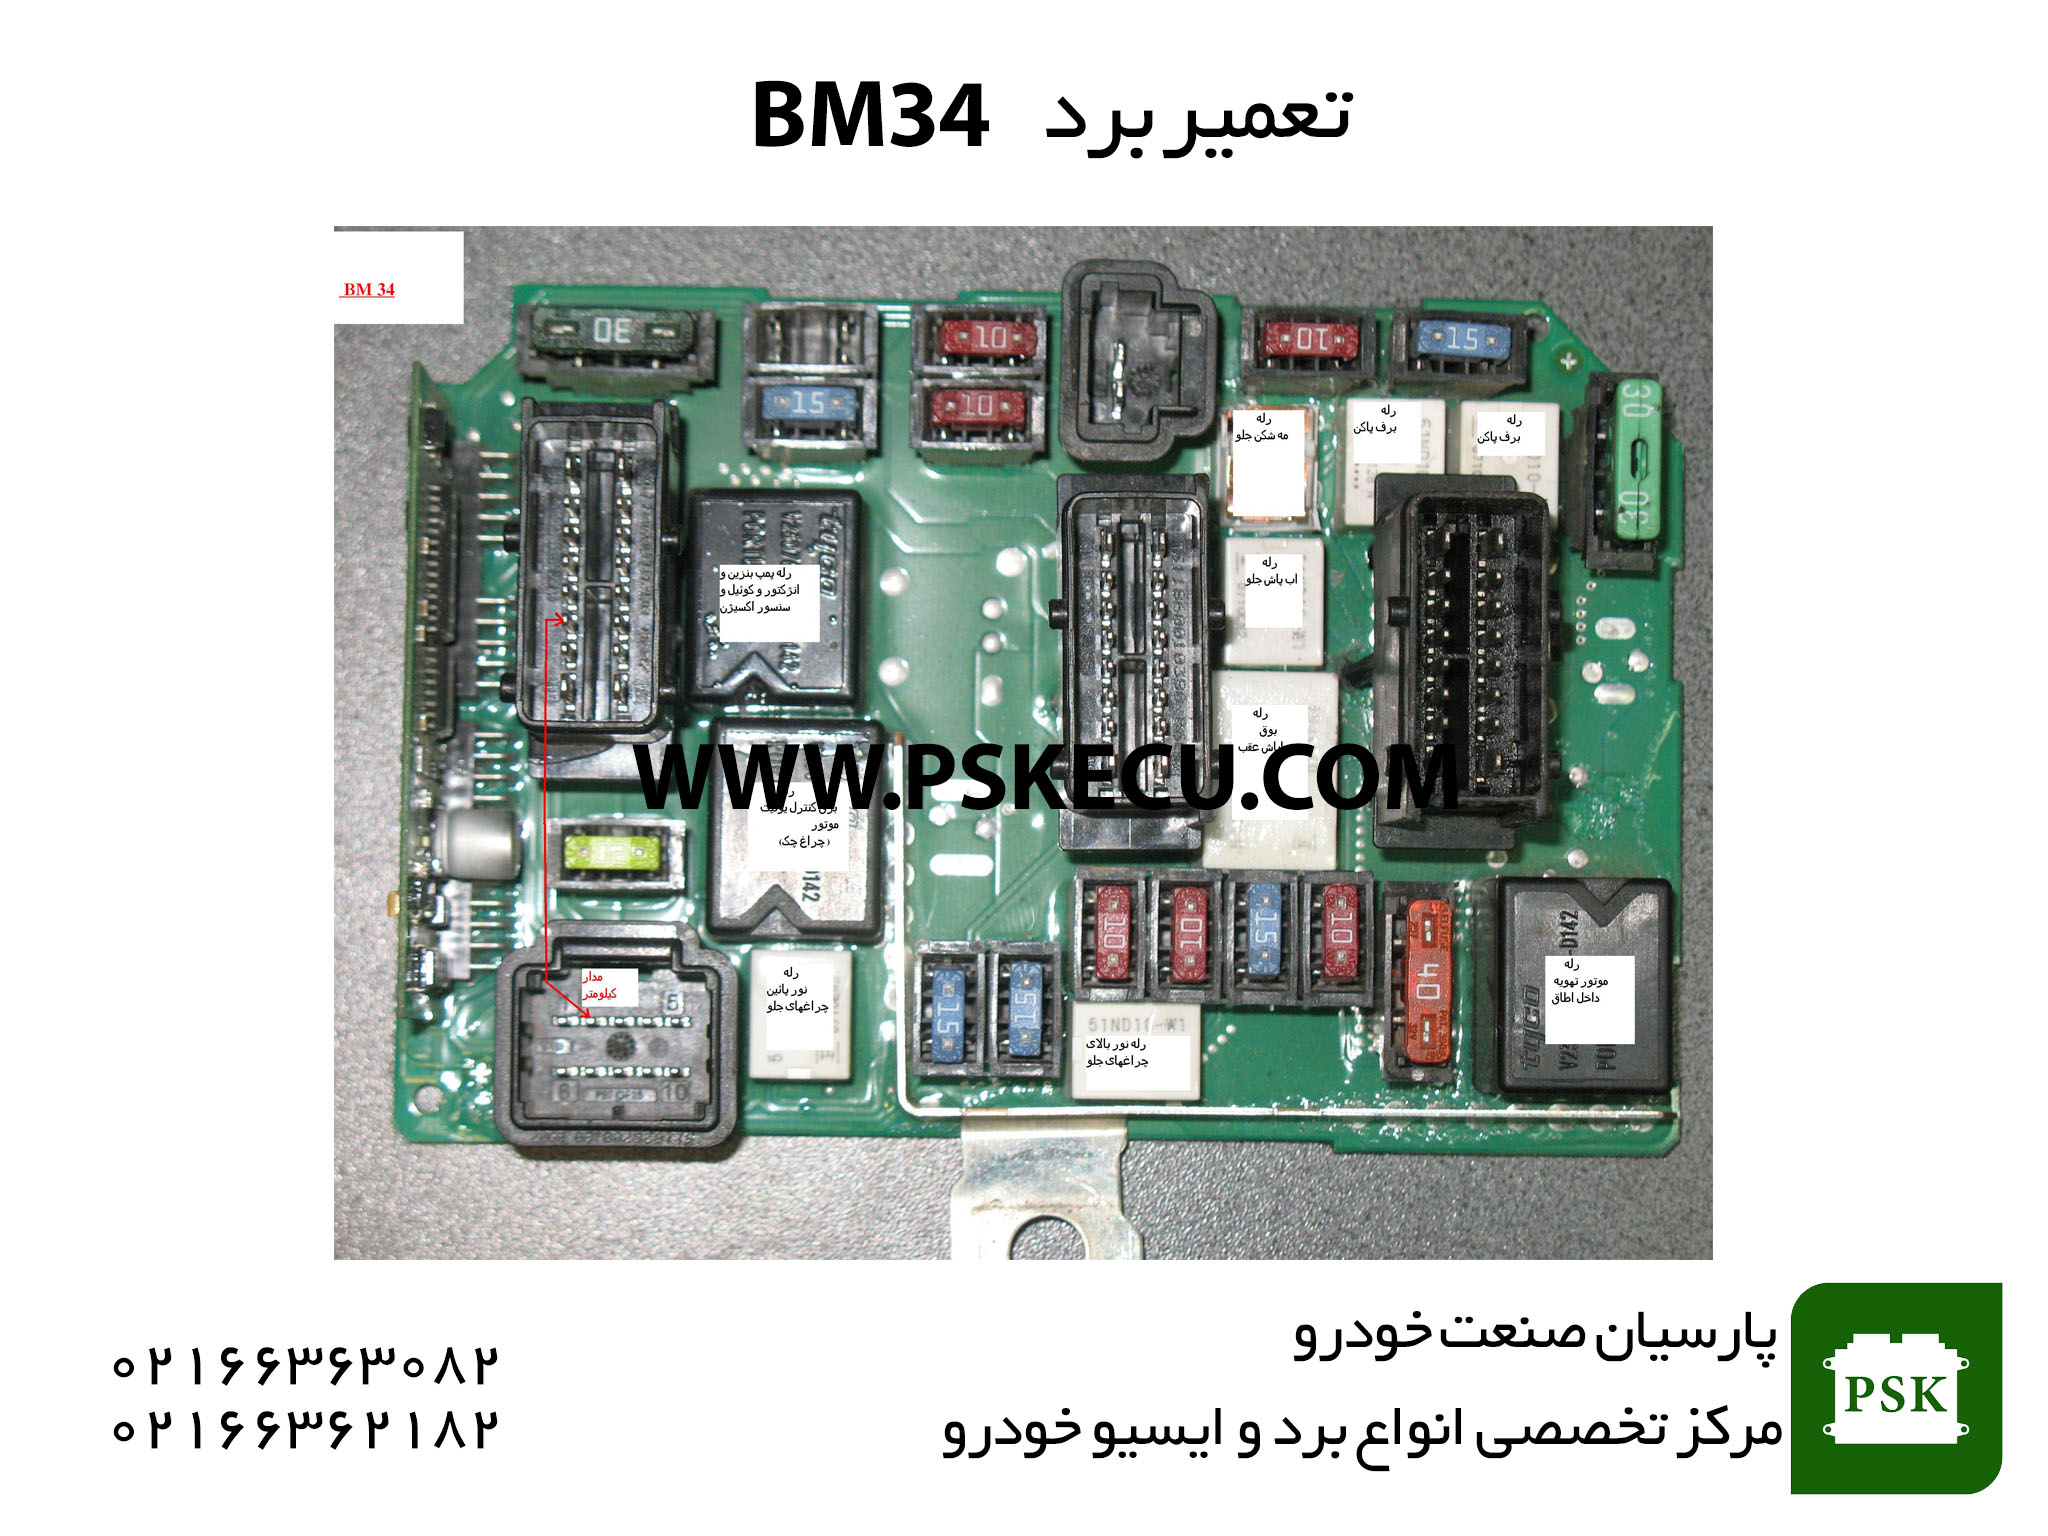 تعمیر برد BSM BM34 - تعمیر یونیت BSM BM34 - تعمیر برد الکترونیکی BSM BM34